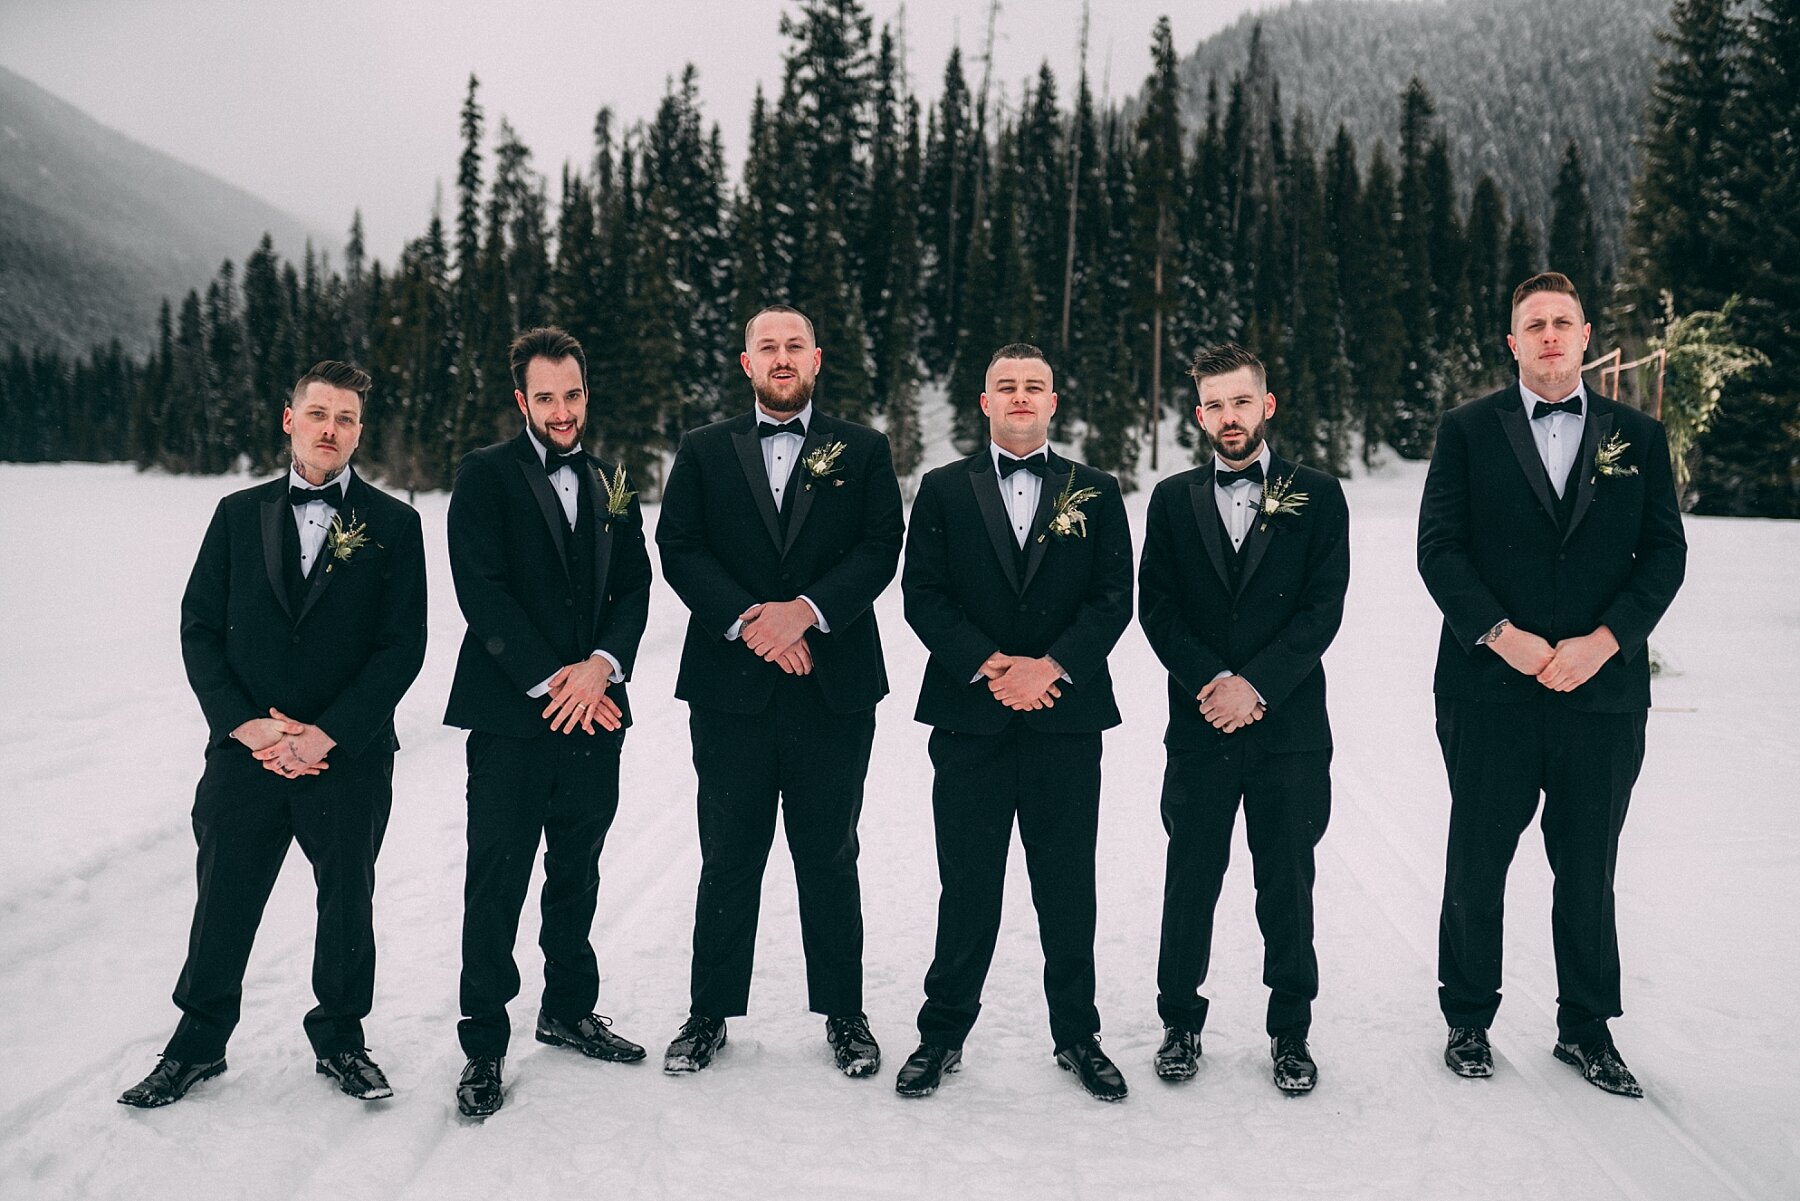 mountain wedding venue British Columbia 